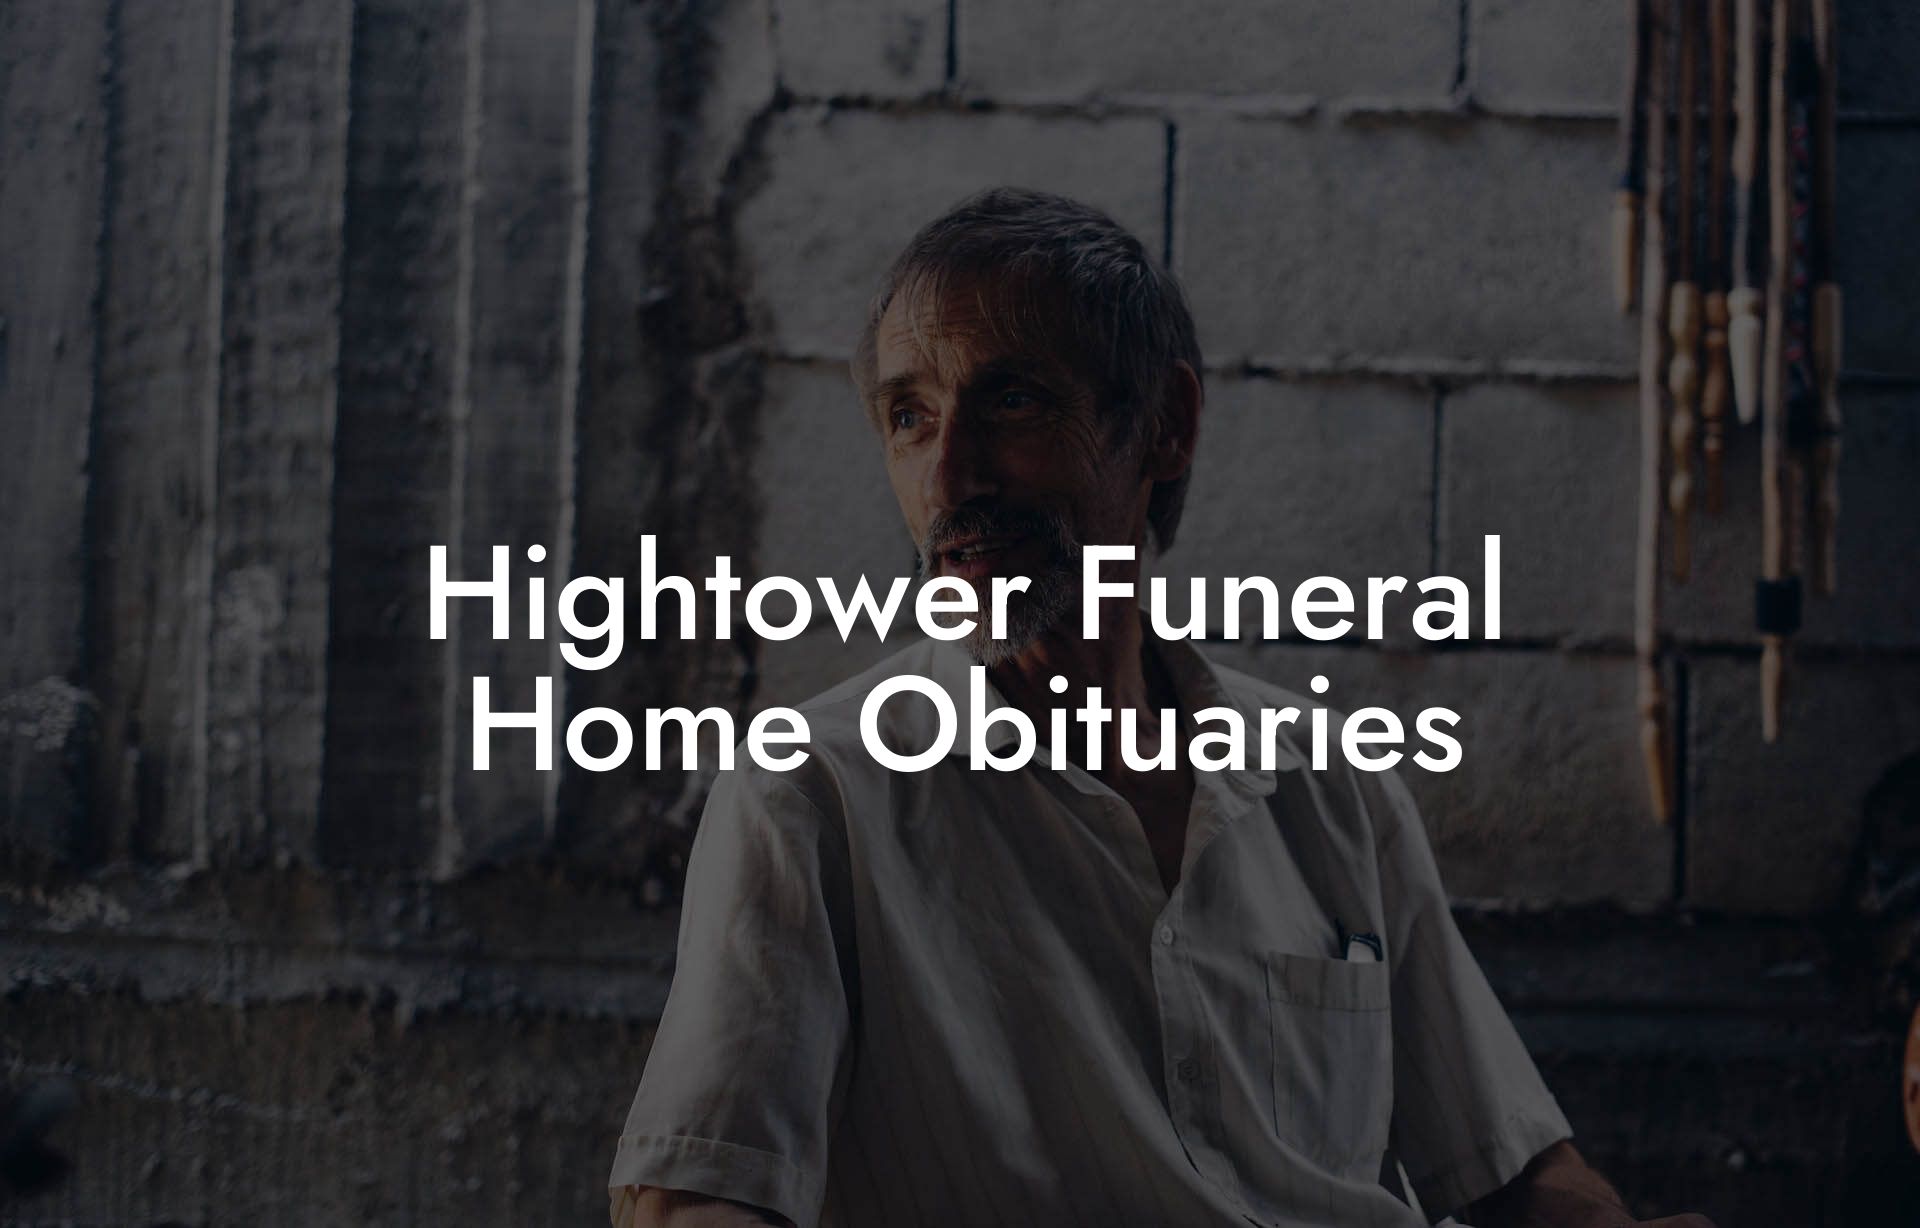 Hightower Funeral Home Obituaries